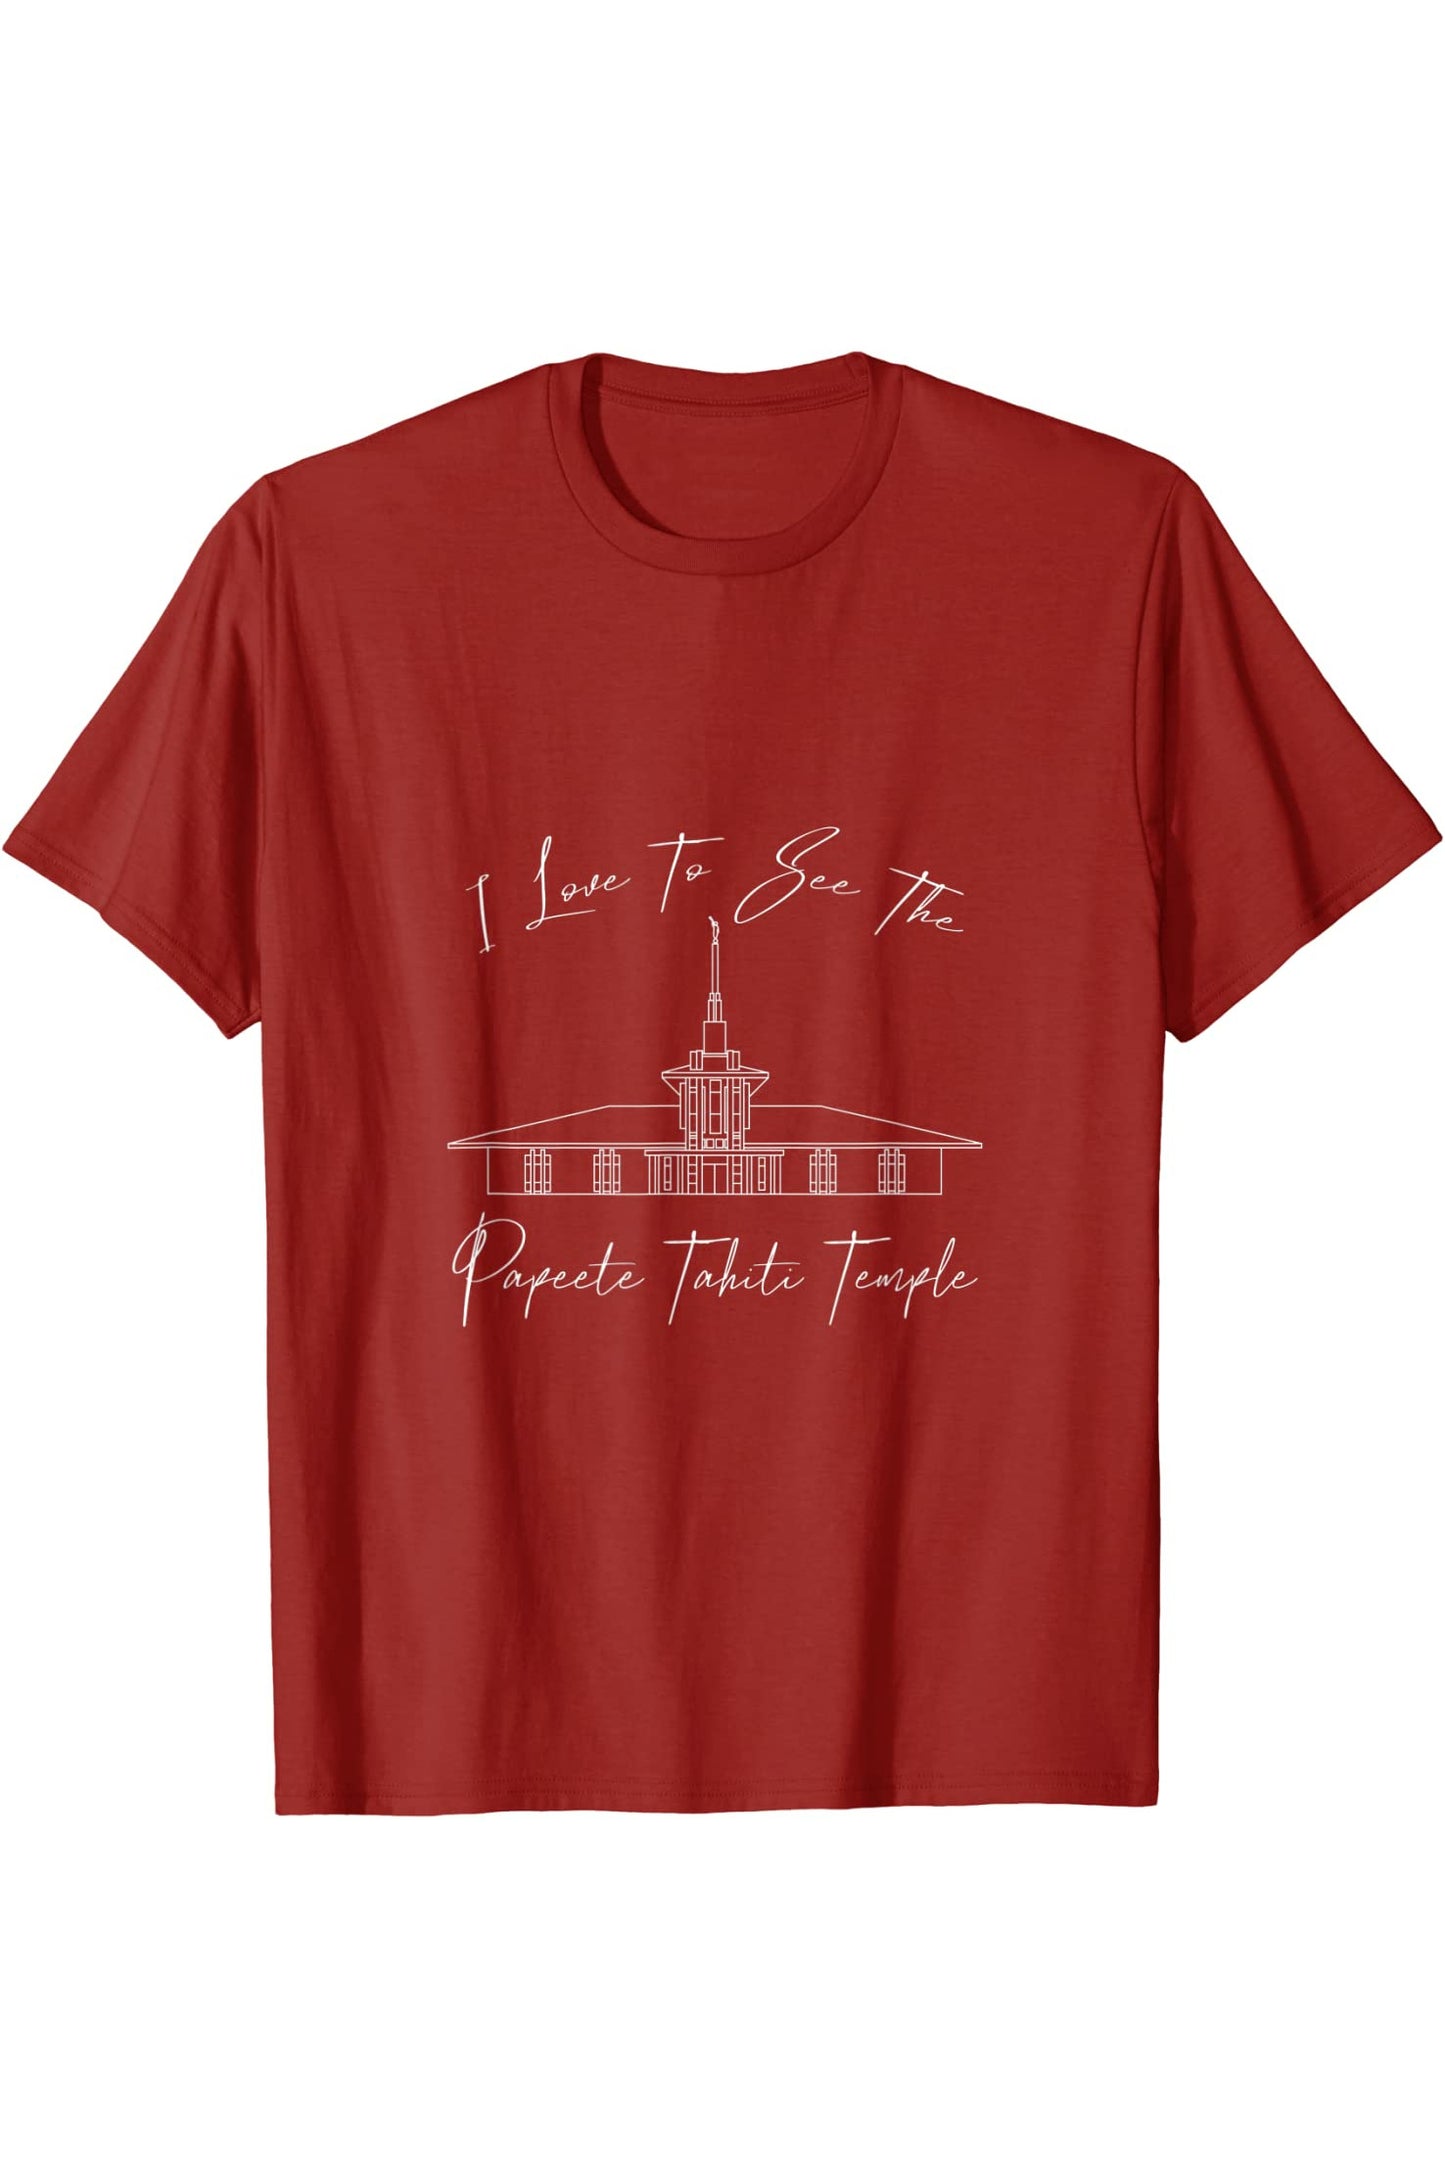 Papeete Tahiti Temple T-Shirt - Calligraphy Style (English) US